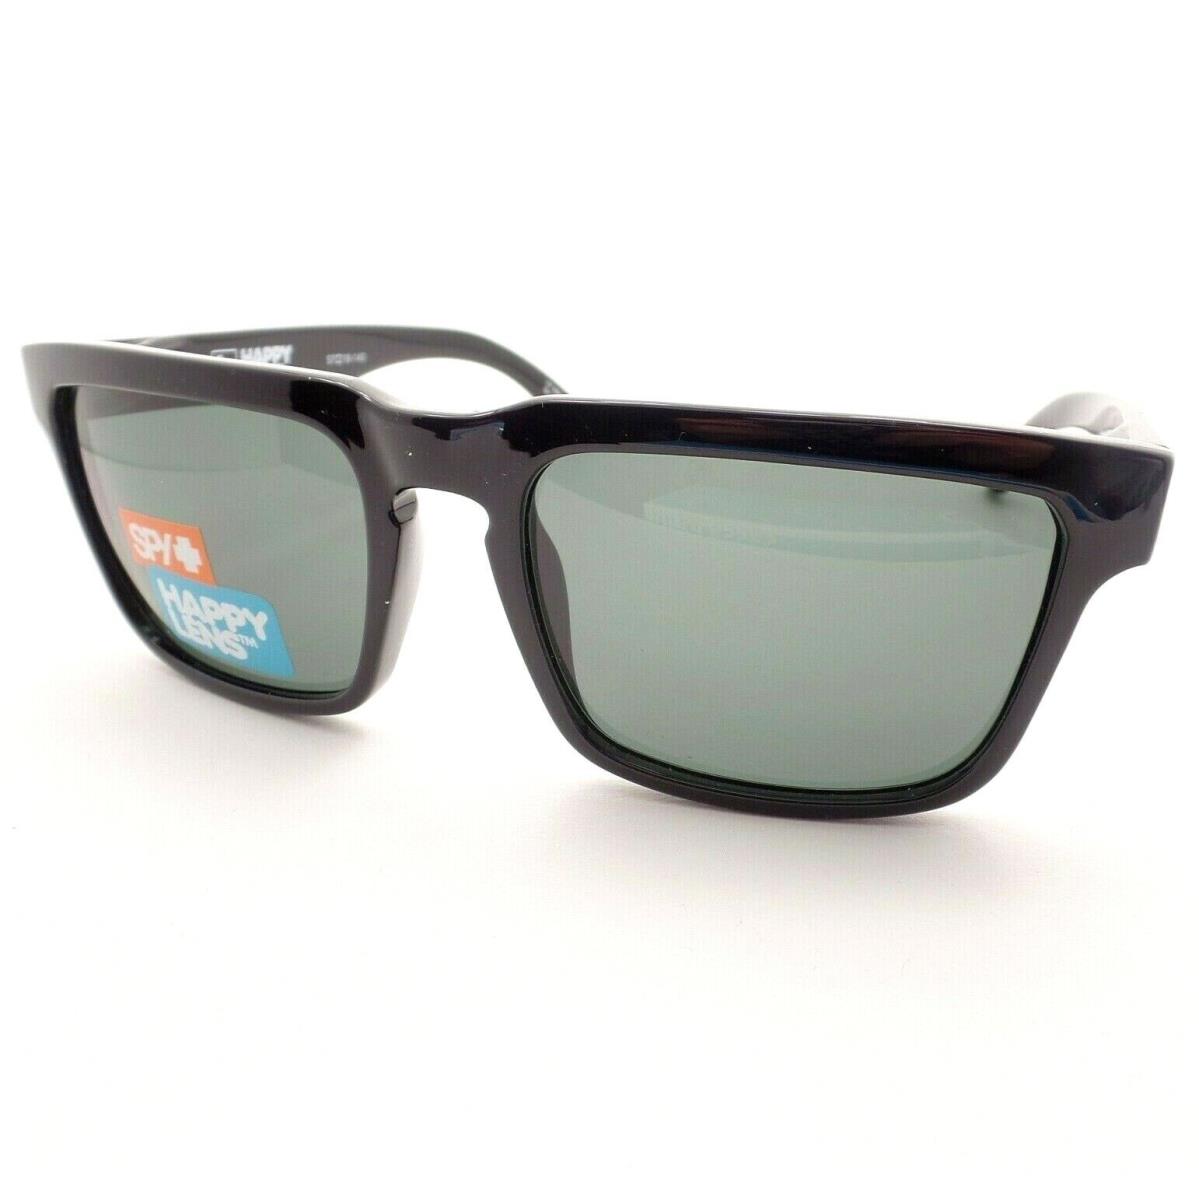 Spy Optics Shiny Helm Black Hd+ Gray Green Sunglasses - Frame: Shiny Black, Lens: HD+ Gray Green